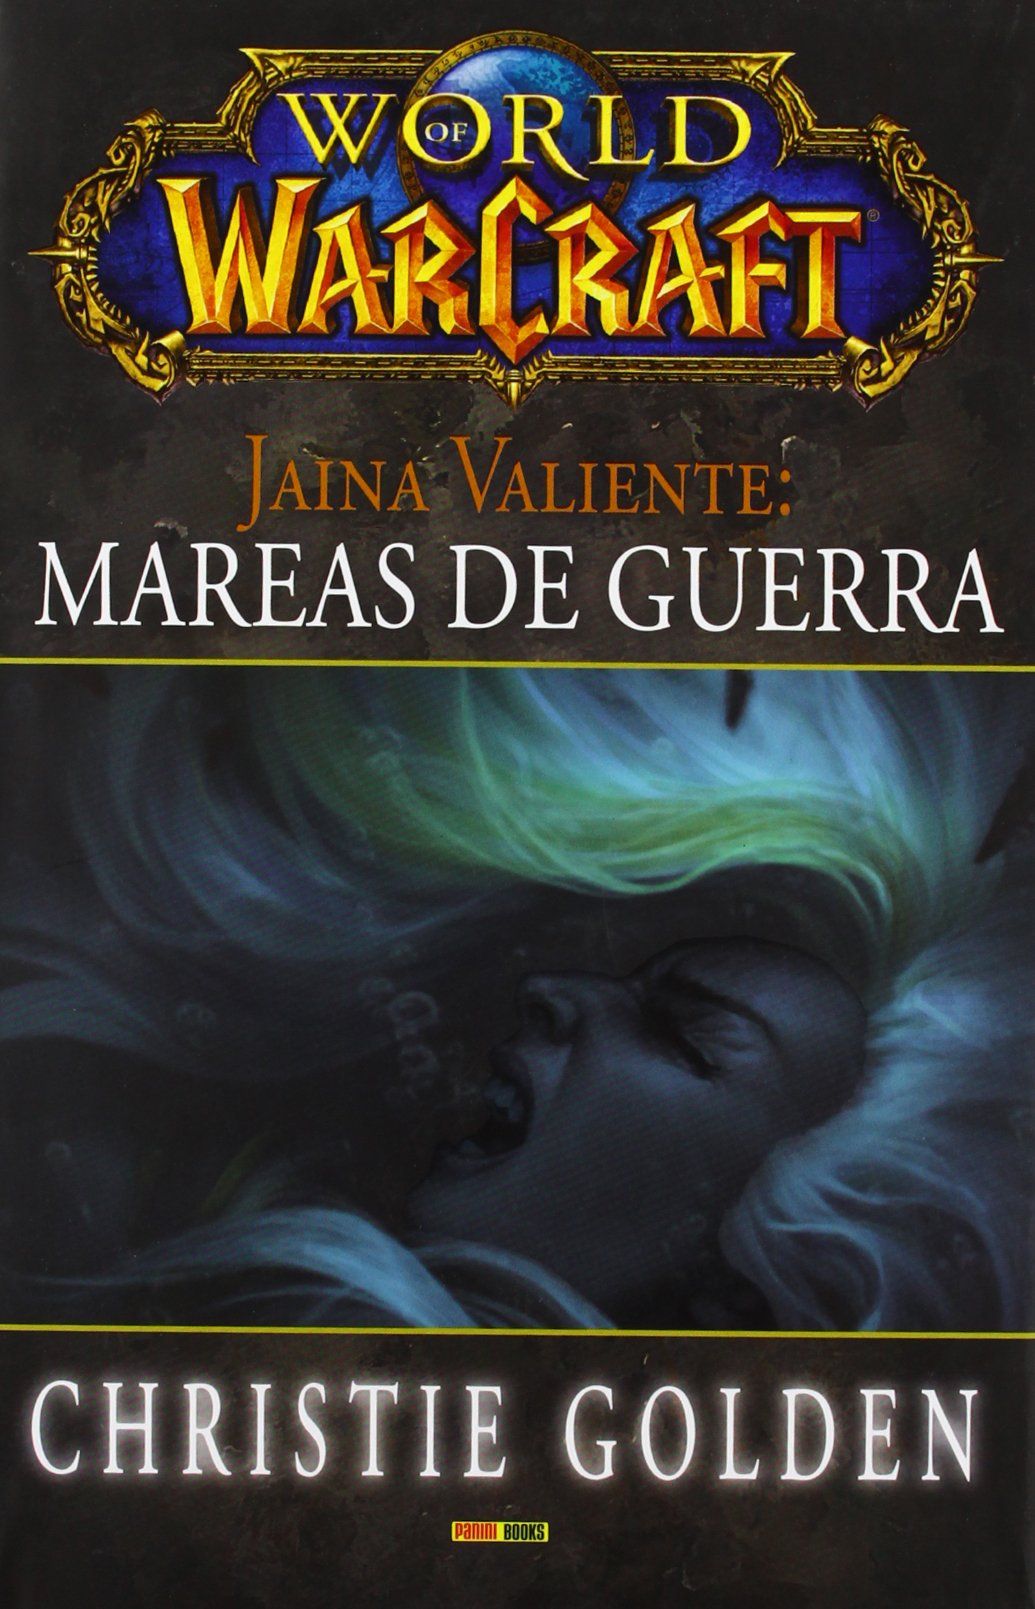 WORLD OF WARCRAFT JAINA VALIENTE: MAREAS DE GUERRA. 